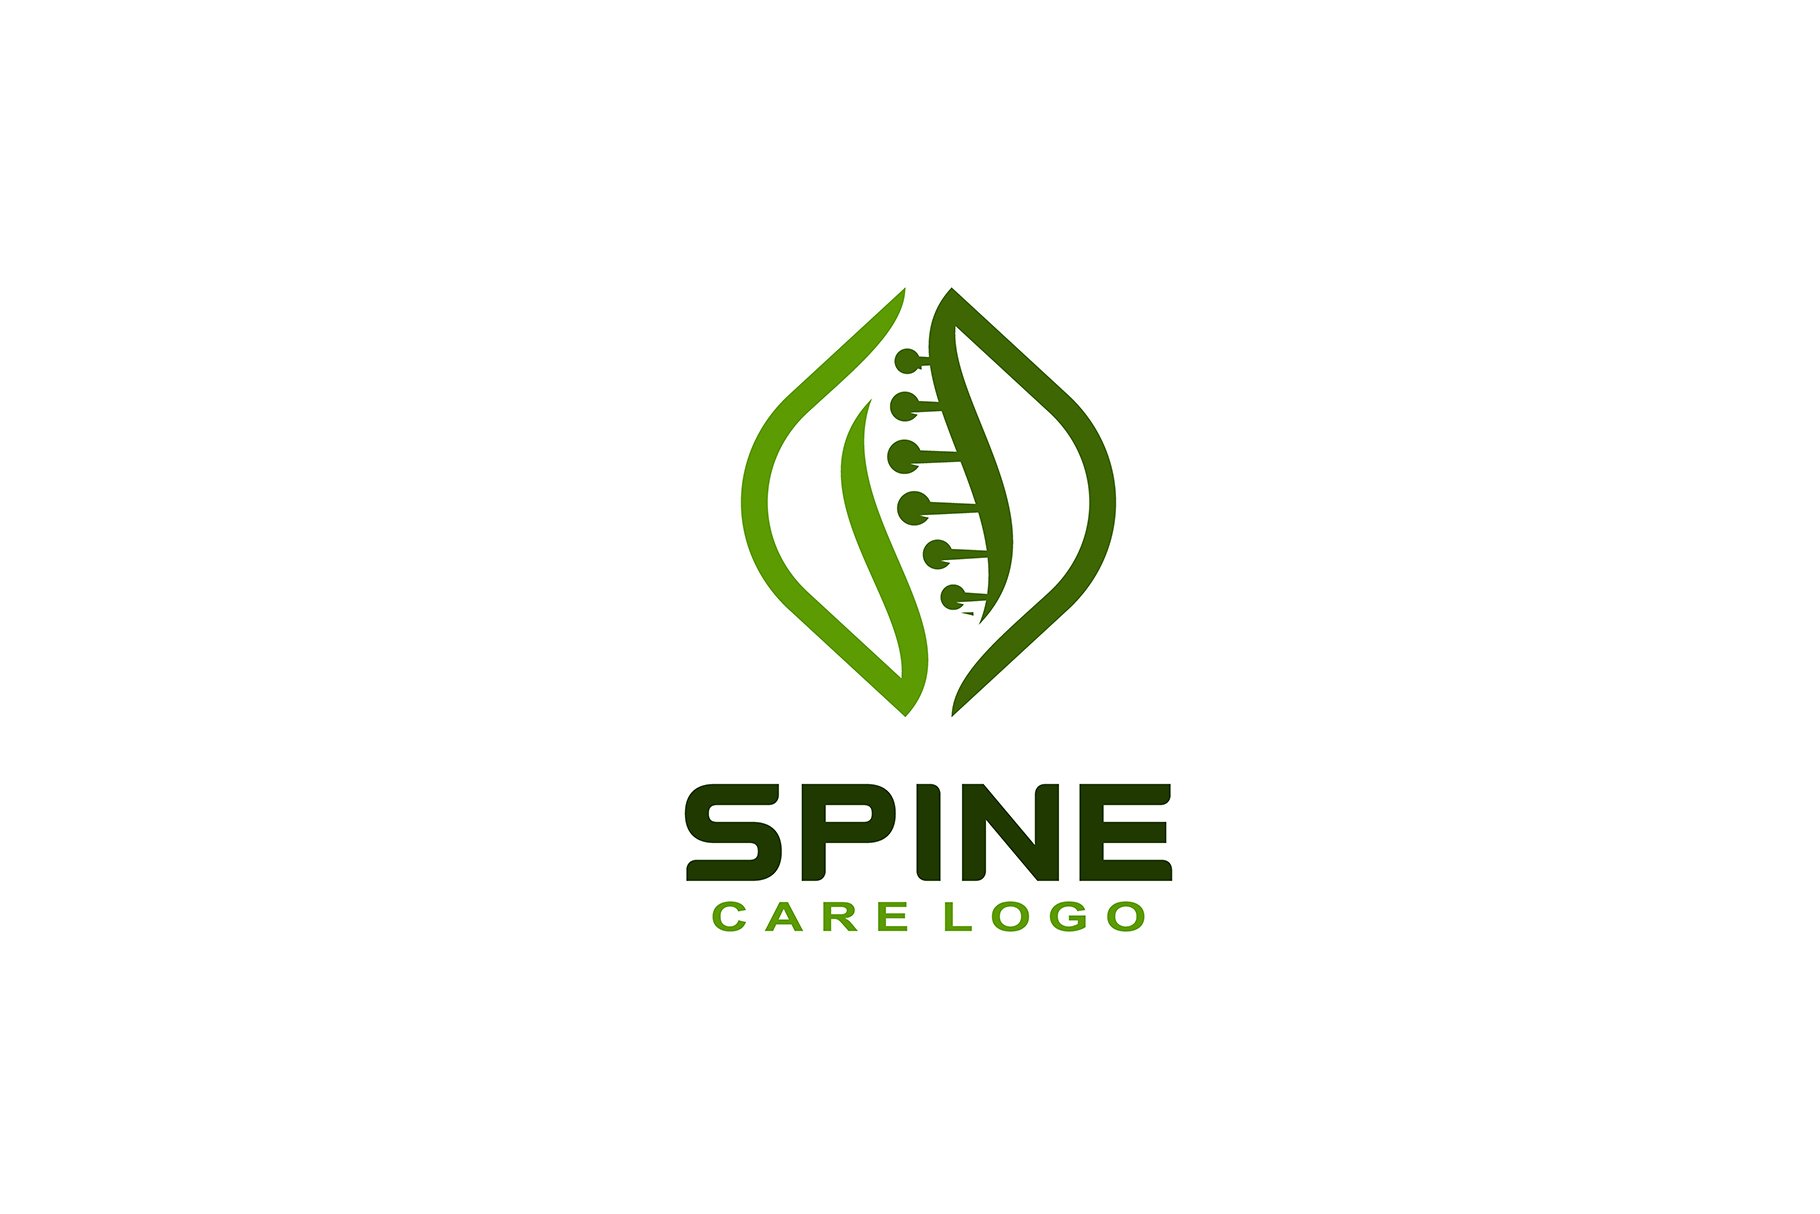 Spine Logo Vector Design Images, Healthy Spine Cartoon Logo, Active, Back,  Body PNG Image For Free Download | Tree logo design, Care logo, Healthcare  logo